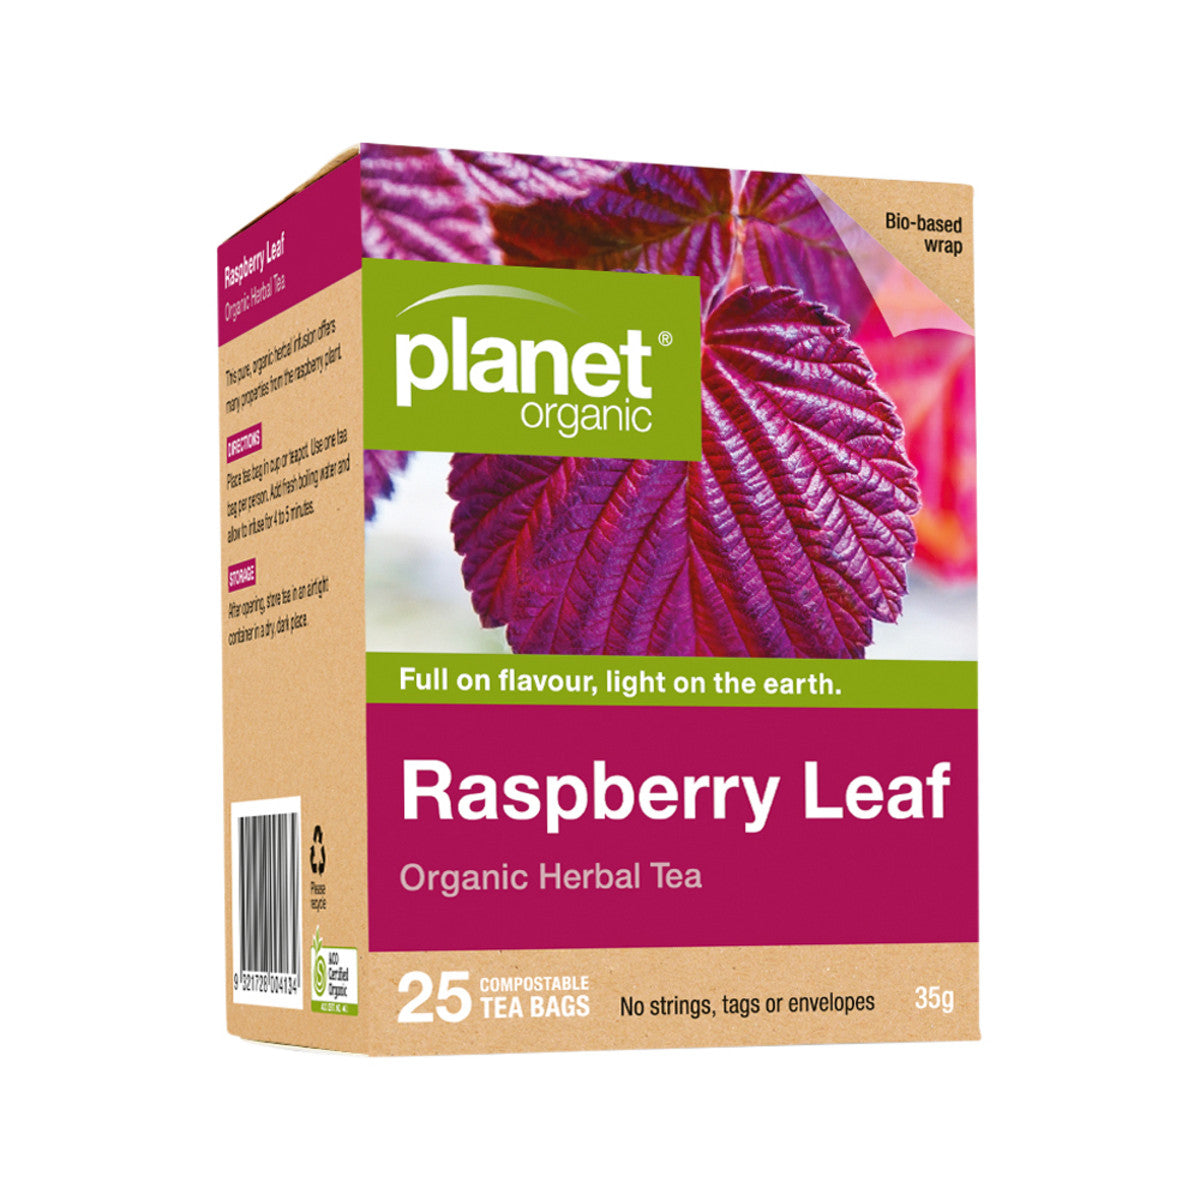 Planet Organic Raspberry Leaf Tea x 25 Tea Bags